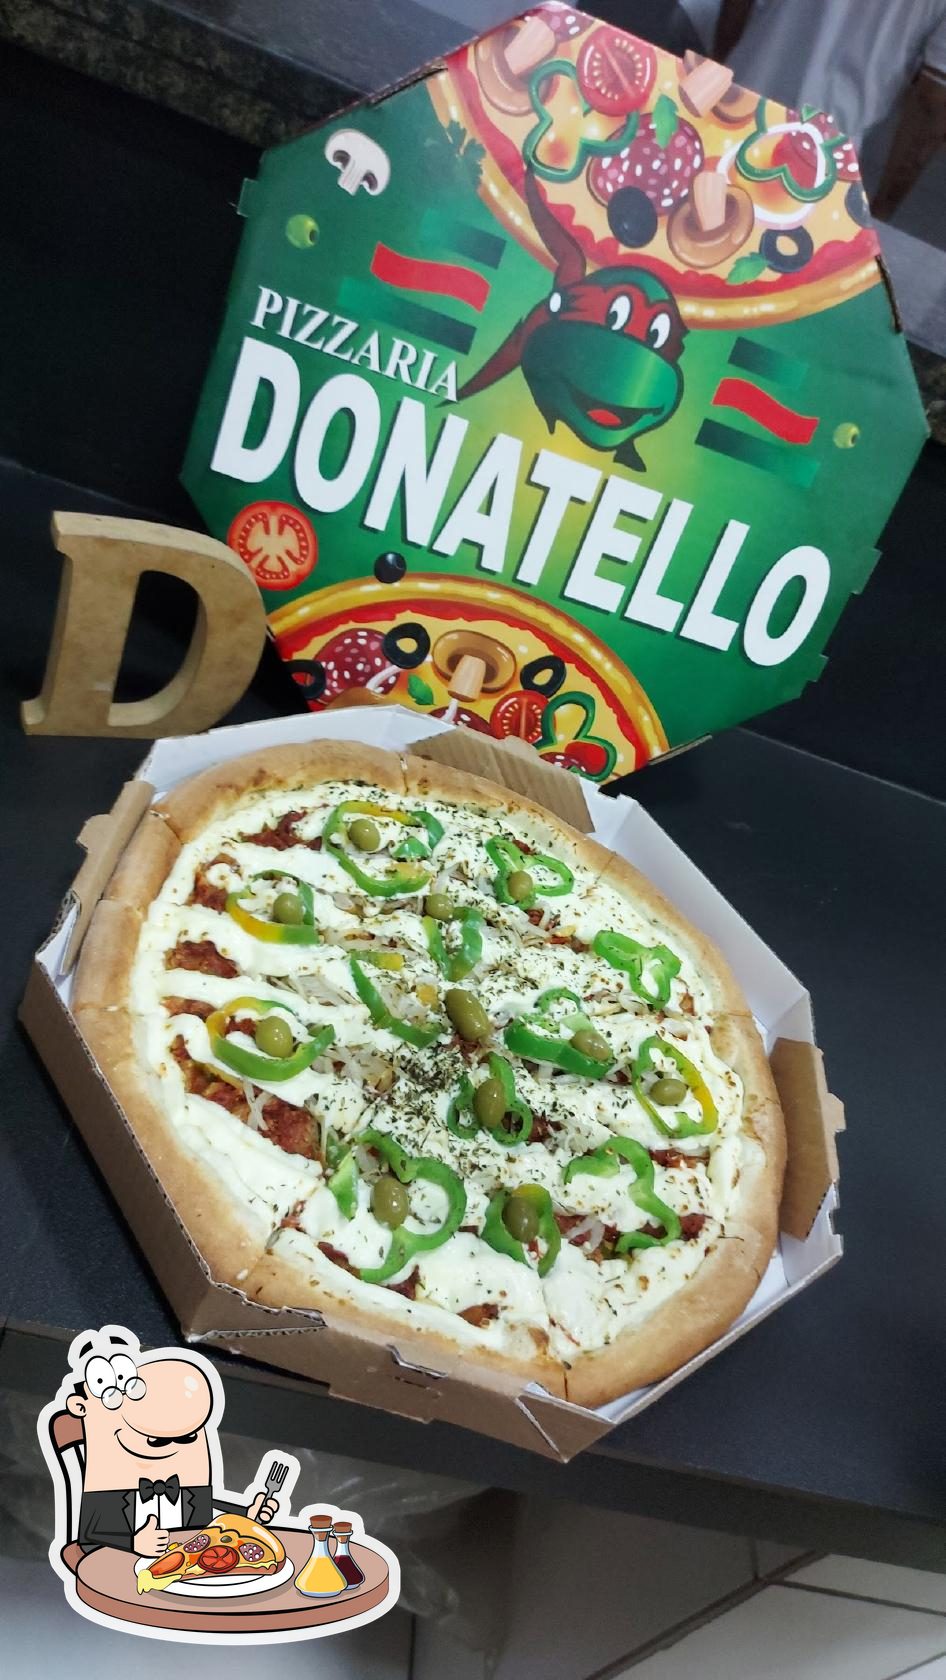 Pizzaria Donatello Jd Nazaré, São Paulo - Restaurant reviews